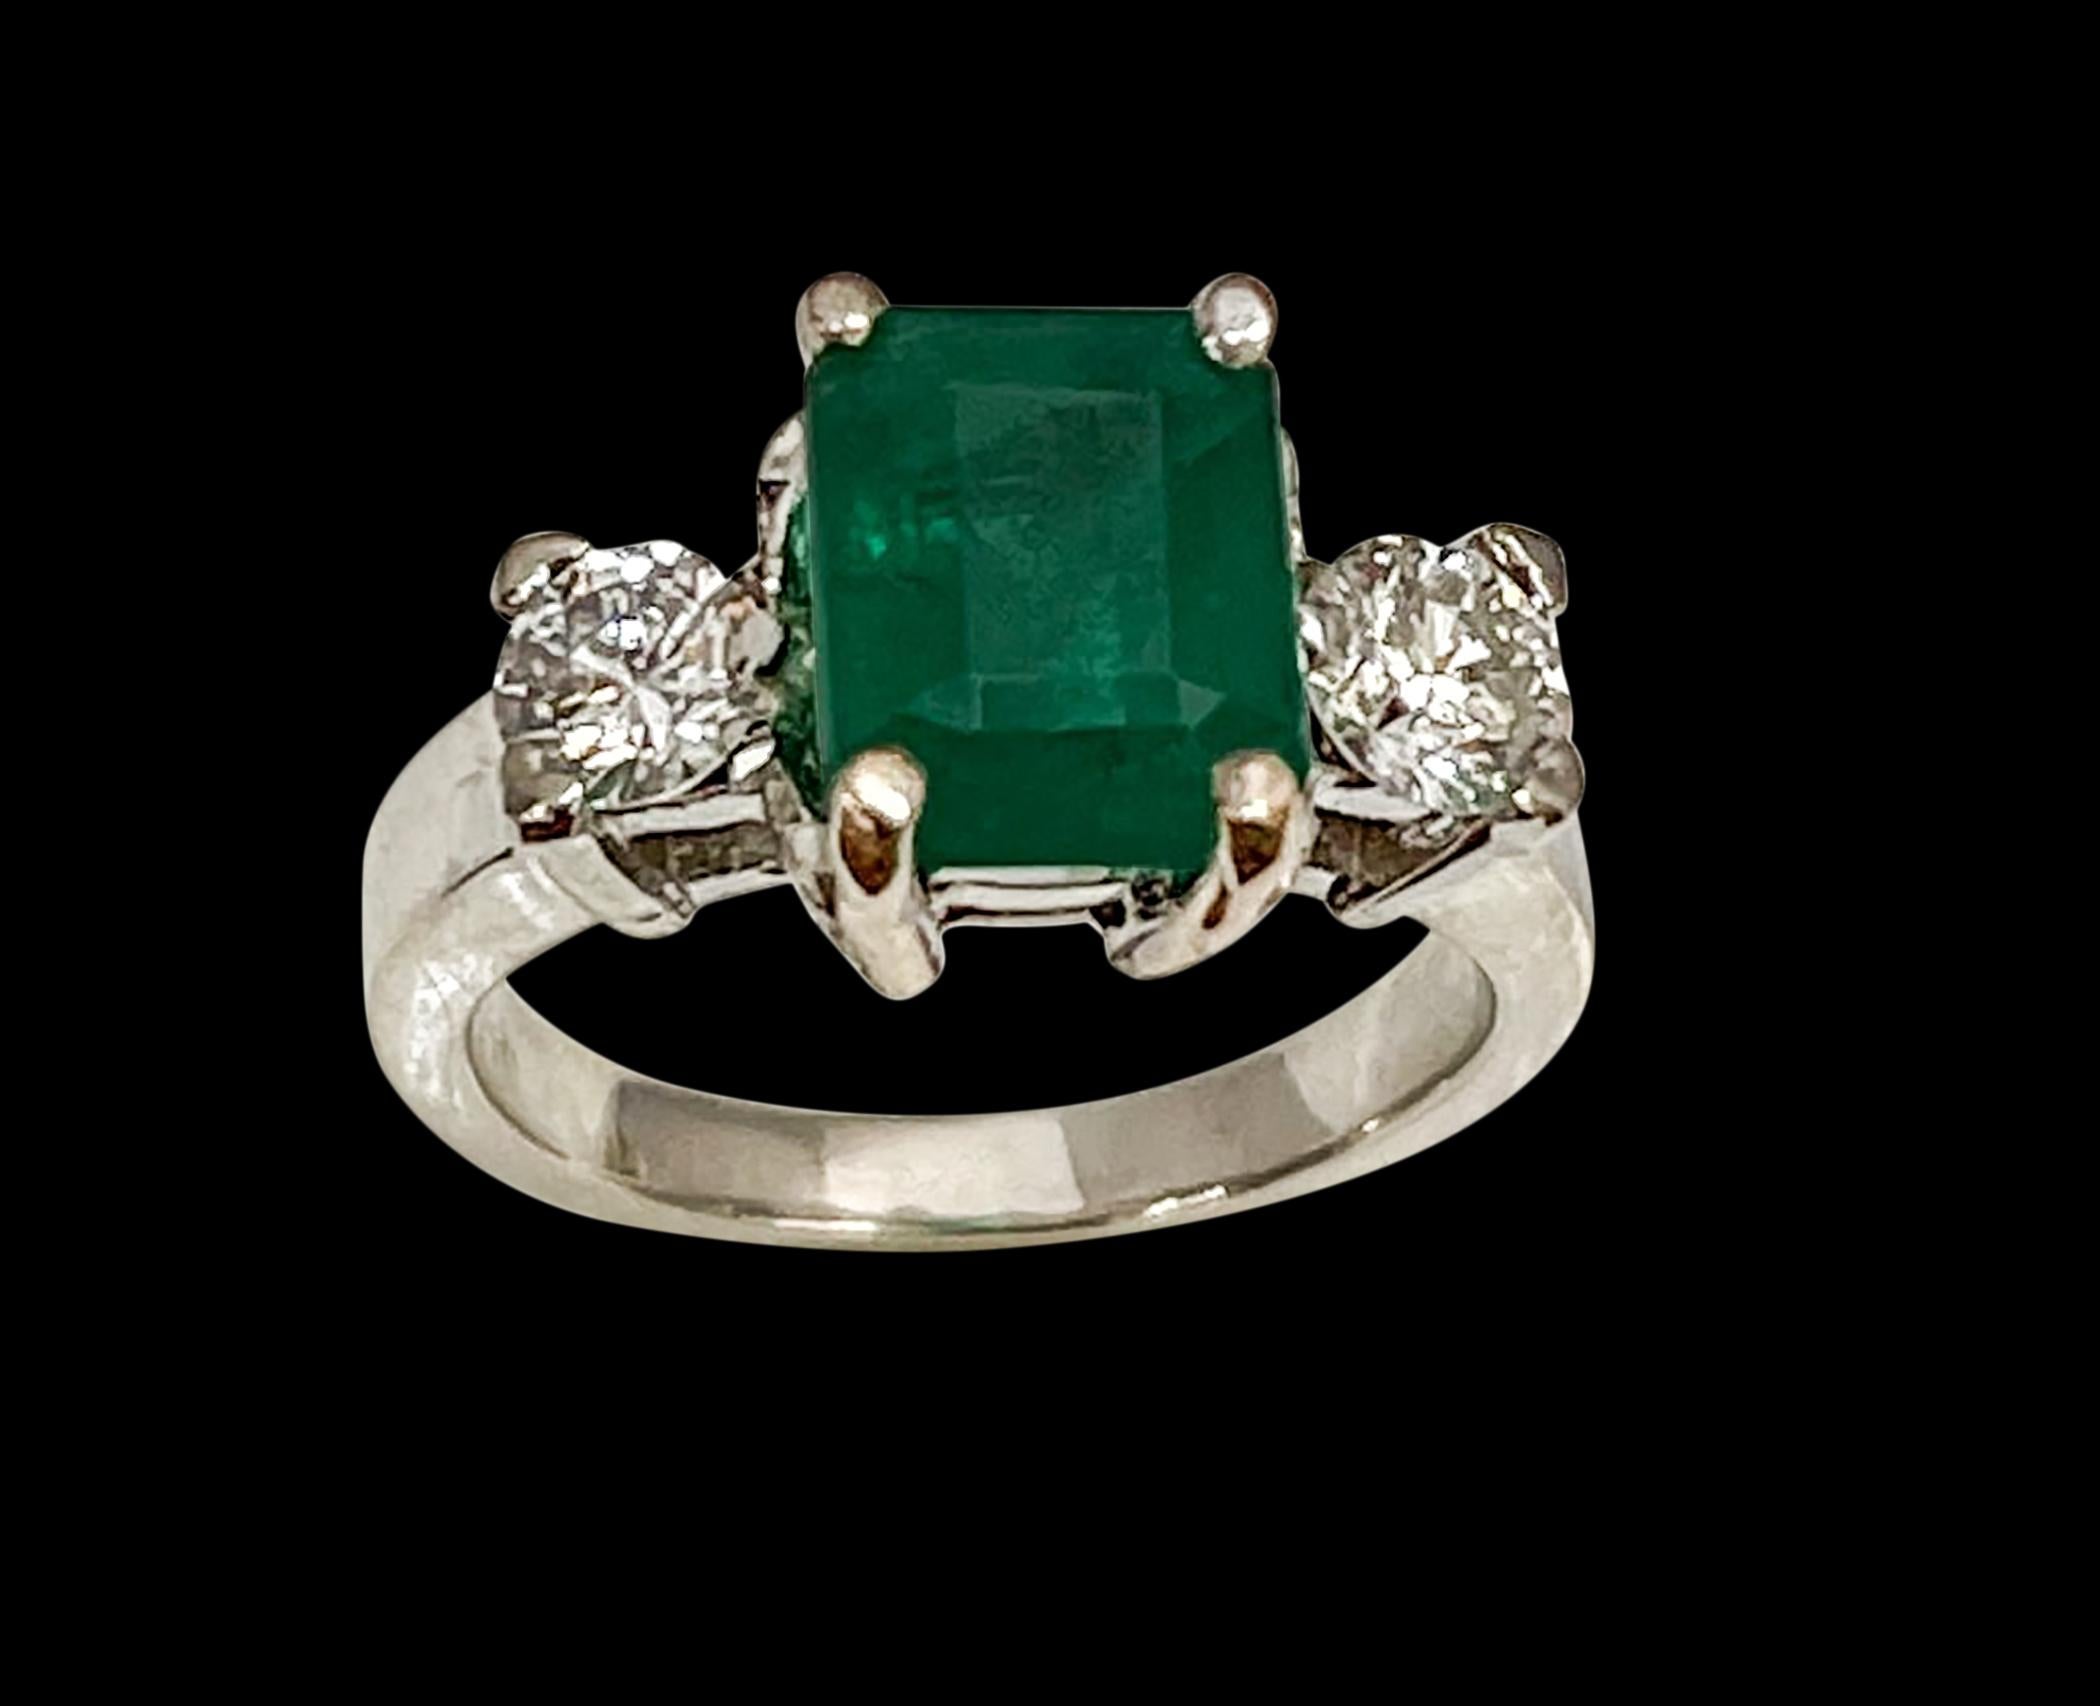 2.5 carat emerald ring